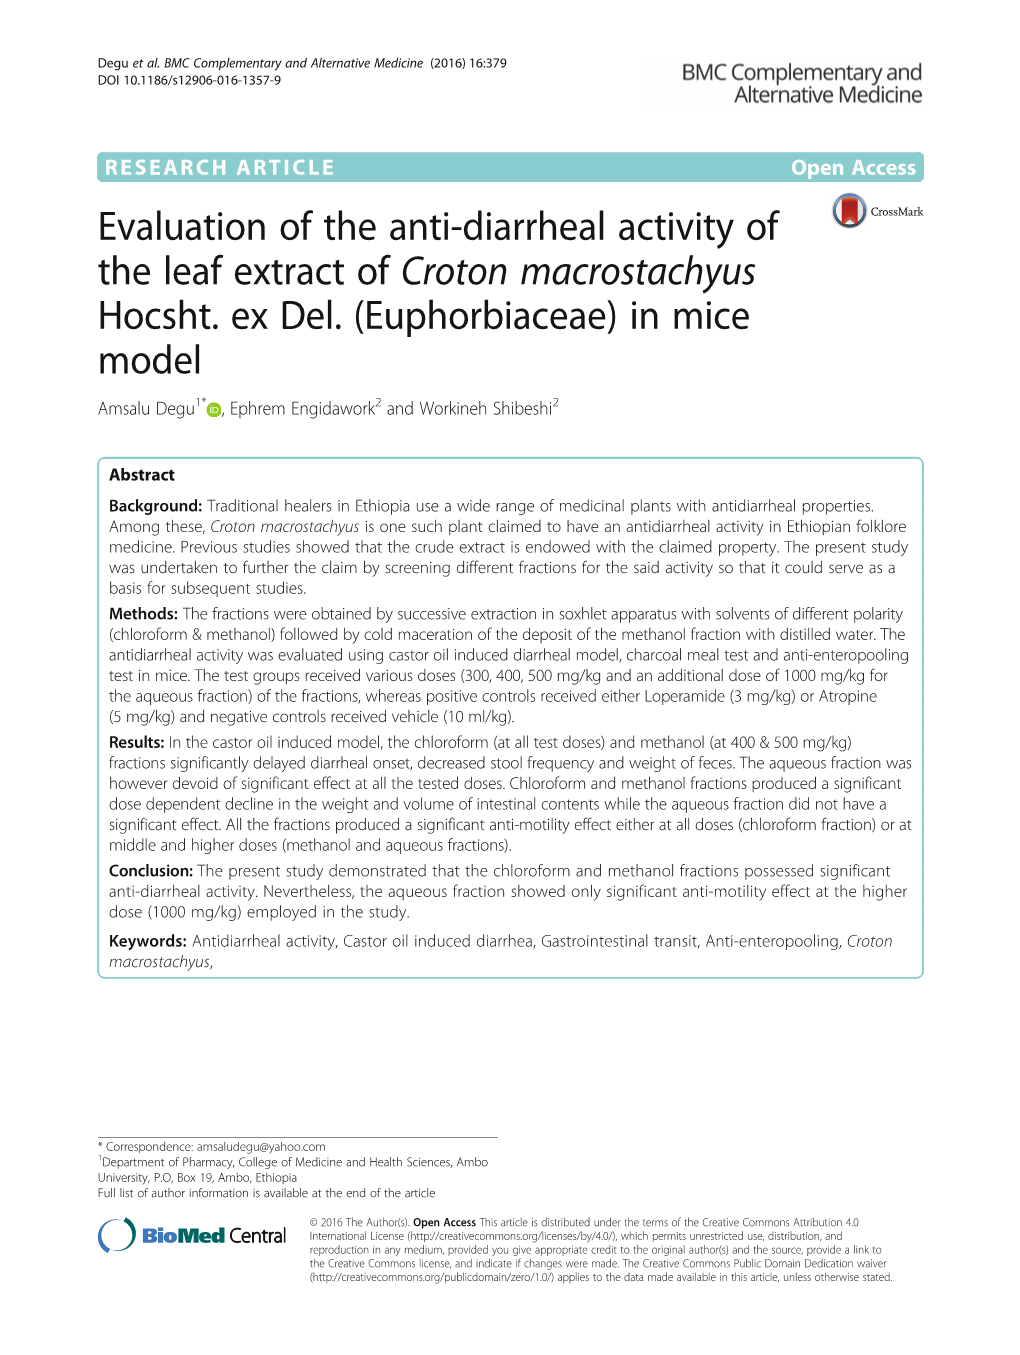 Evaluation of the Anti-Diarrheal Activity of the Leaf Extract of Croton Macrostachyus Hocsht. Ex Del.(Euphorbiaceae) in Mice Model